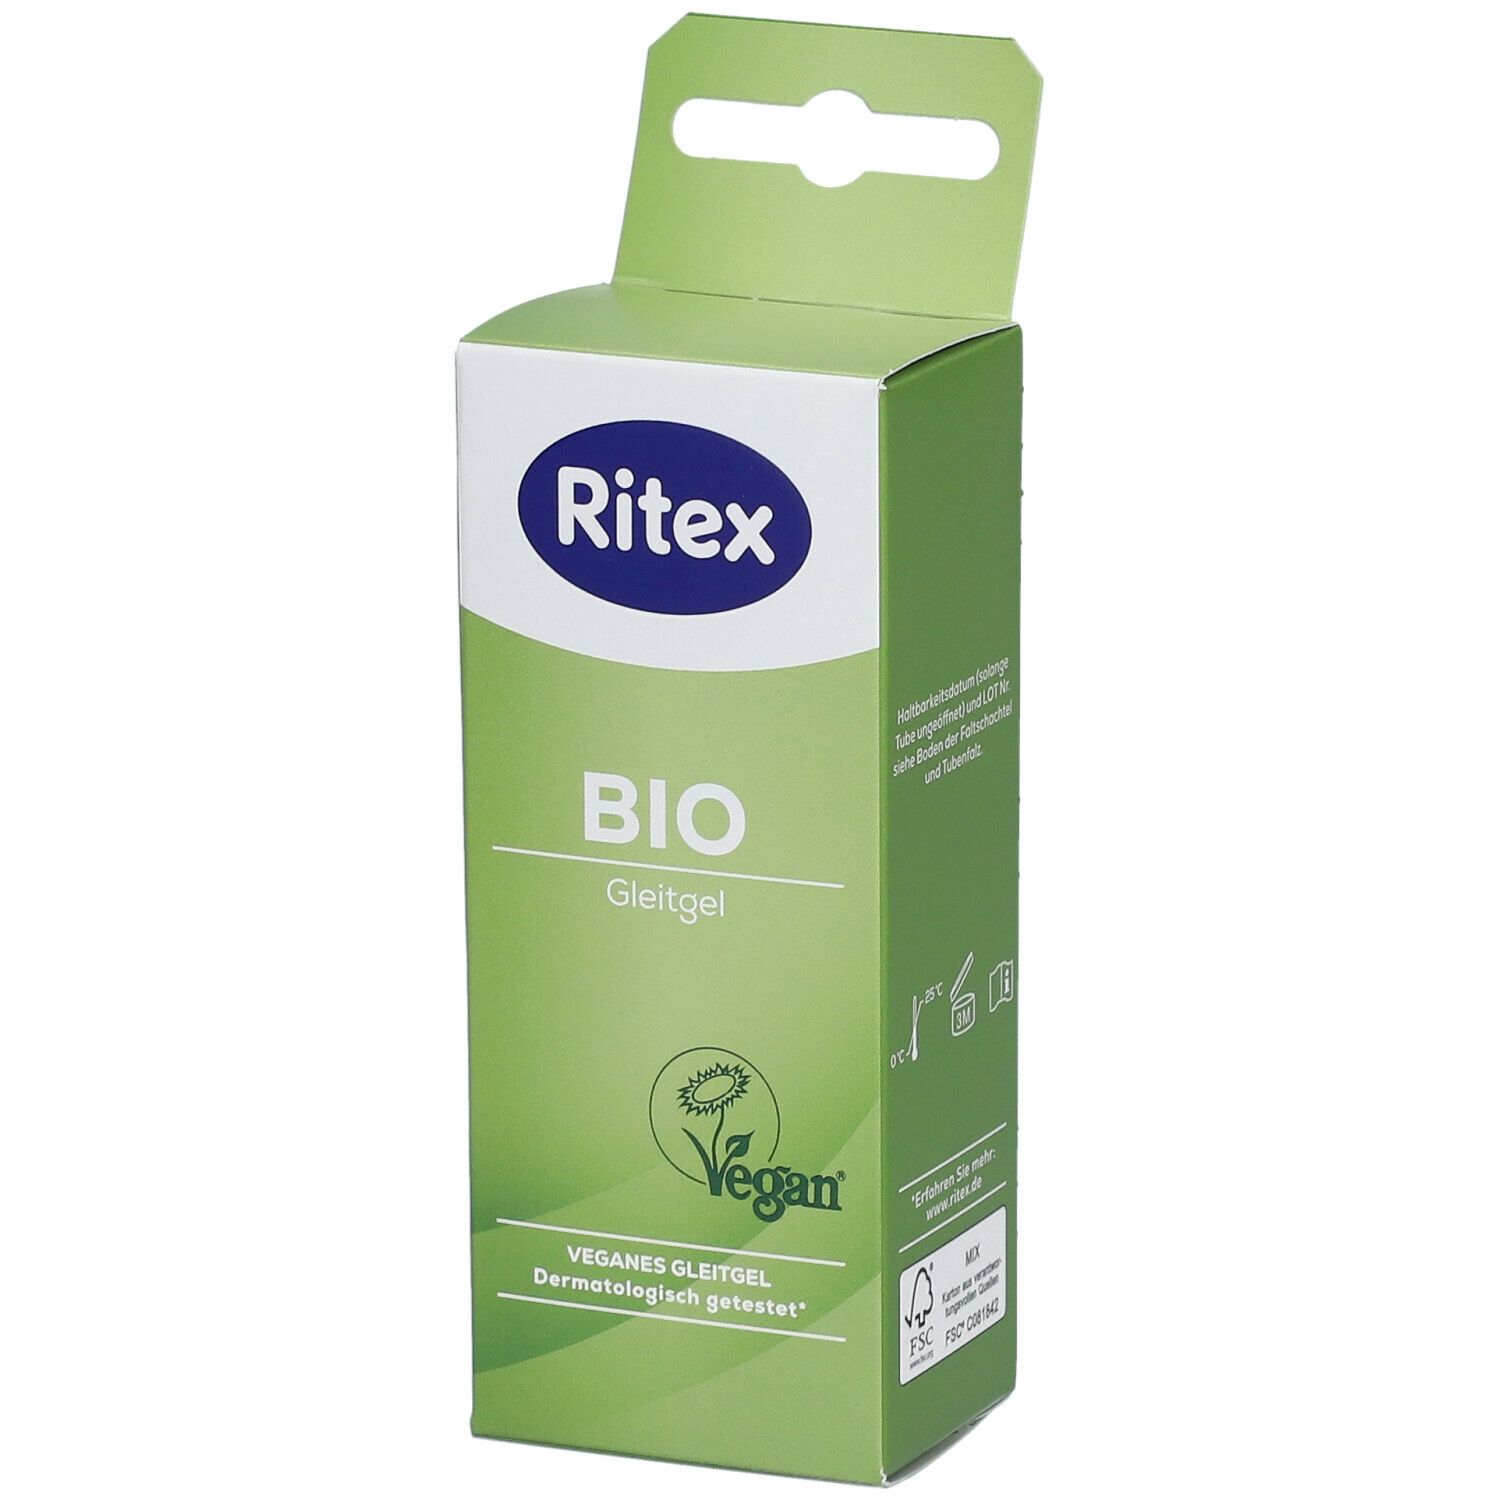 Ritex BIO Gleitgel